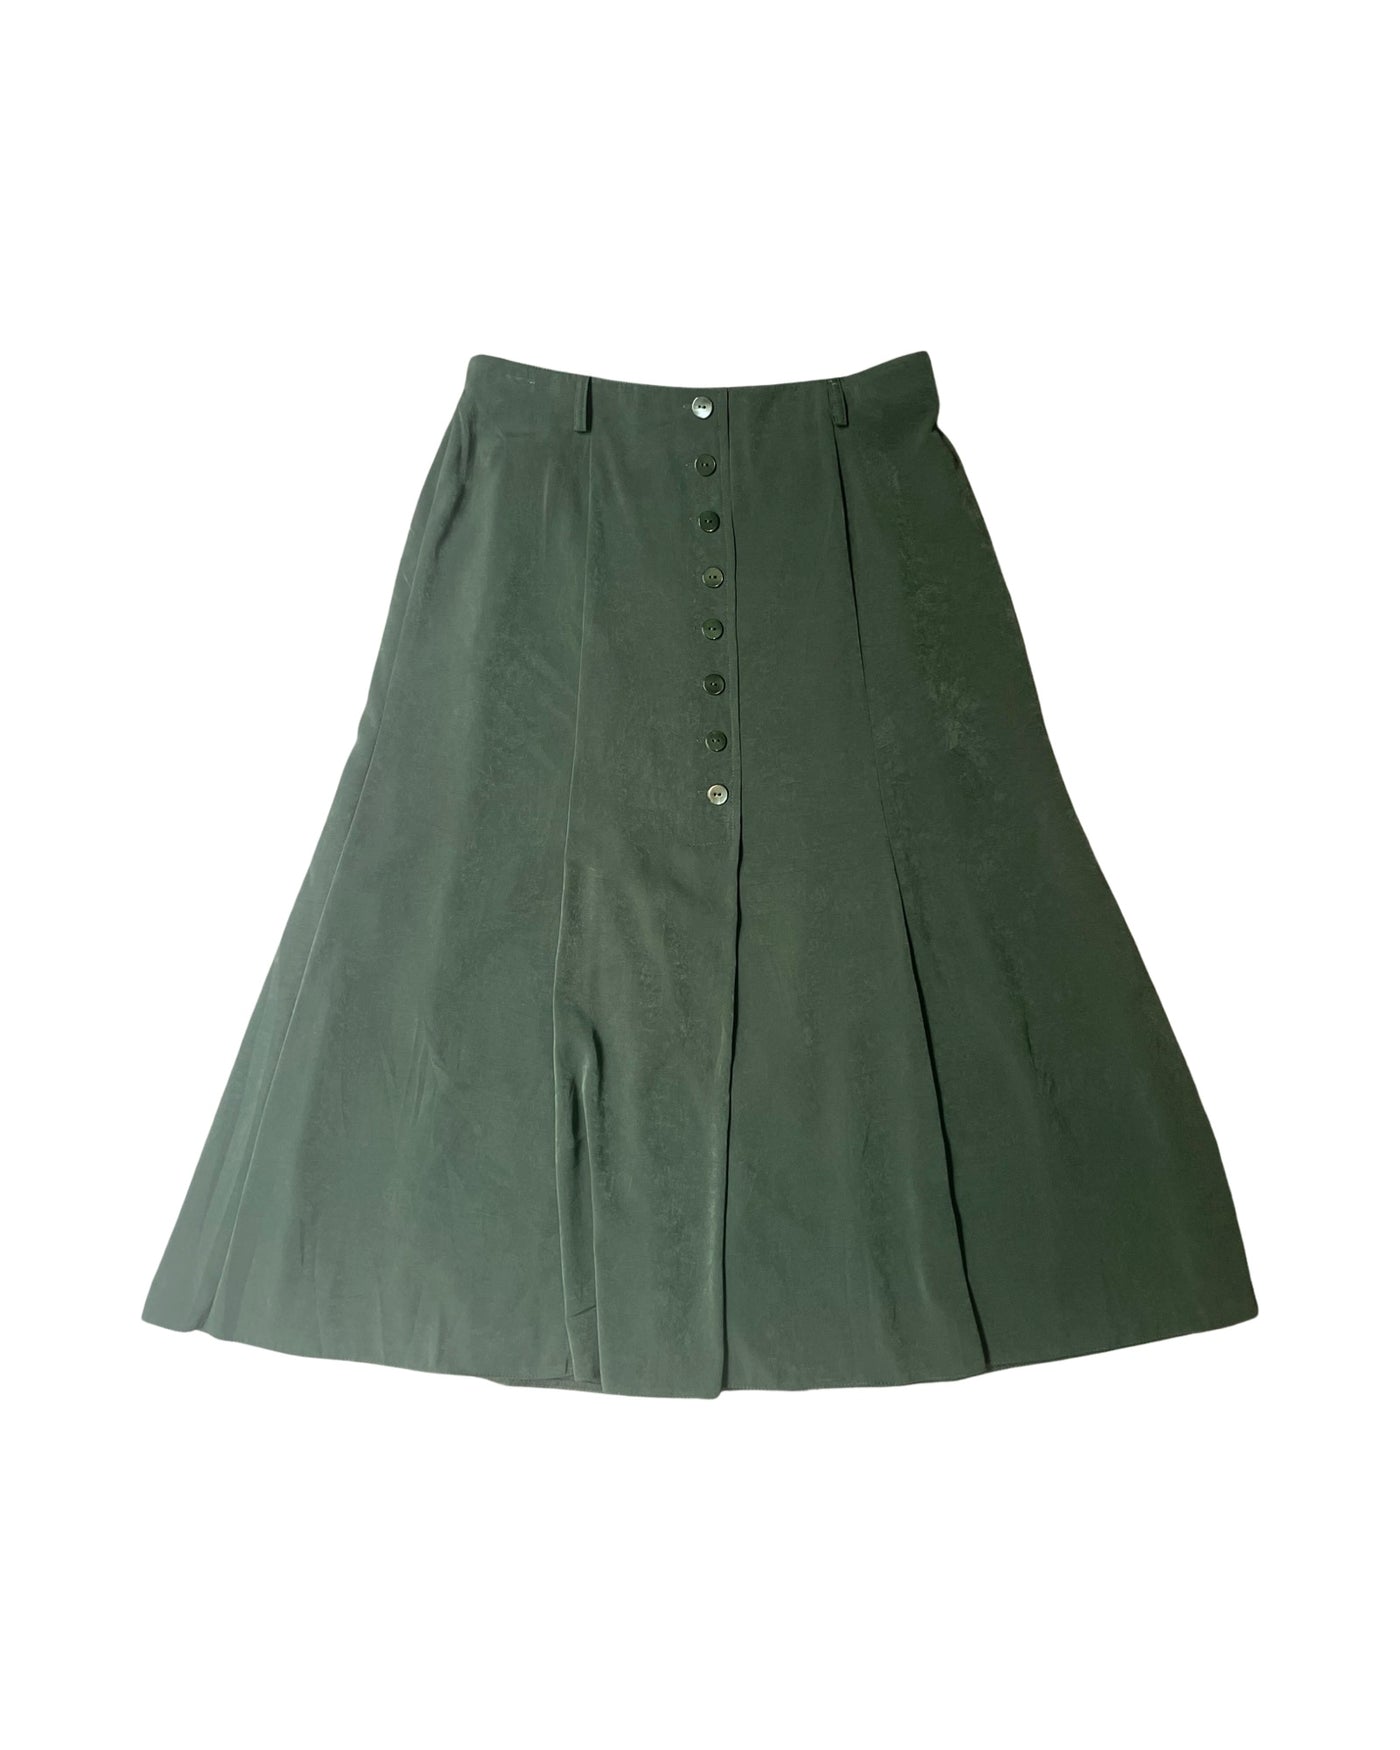 Vintage 90’s Skirt